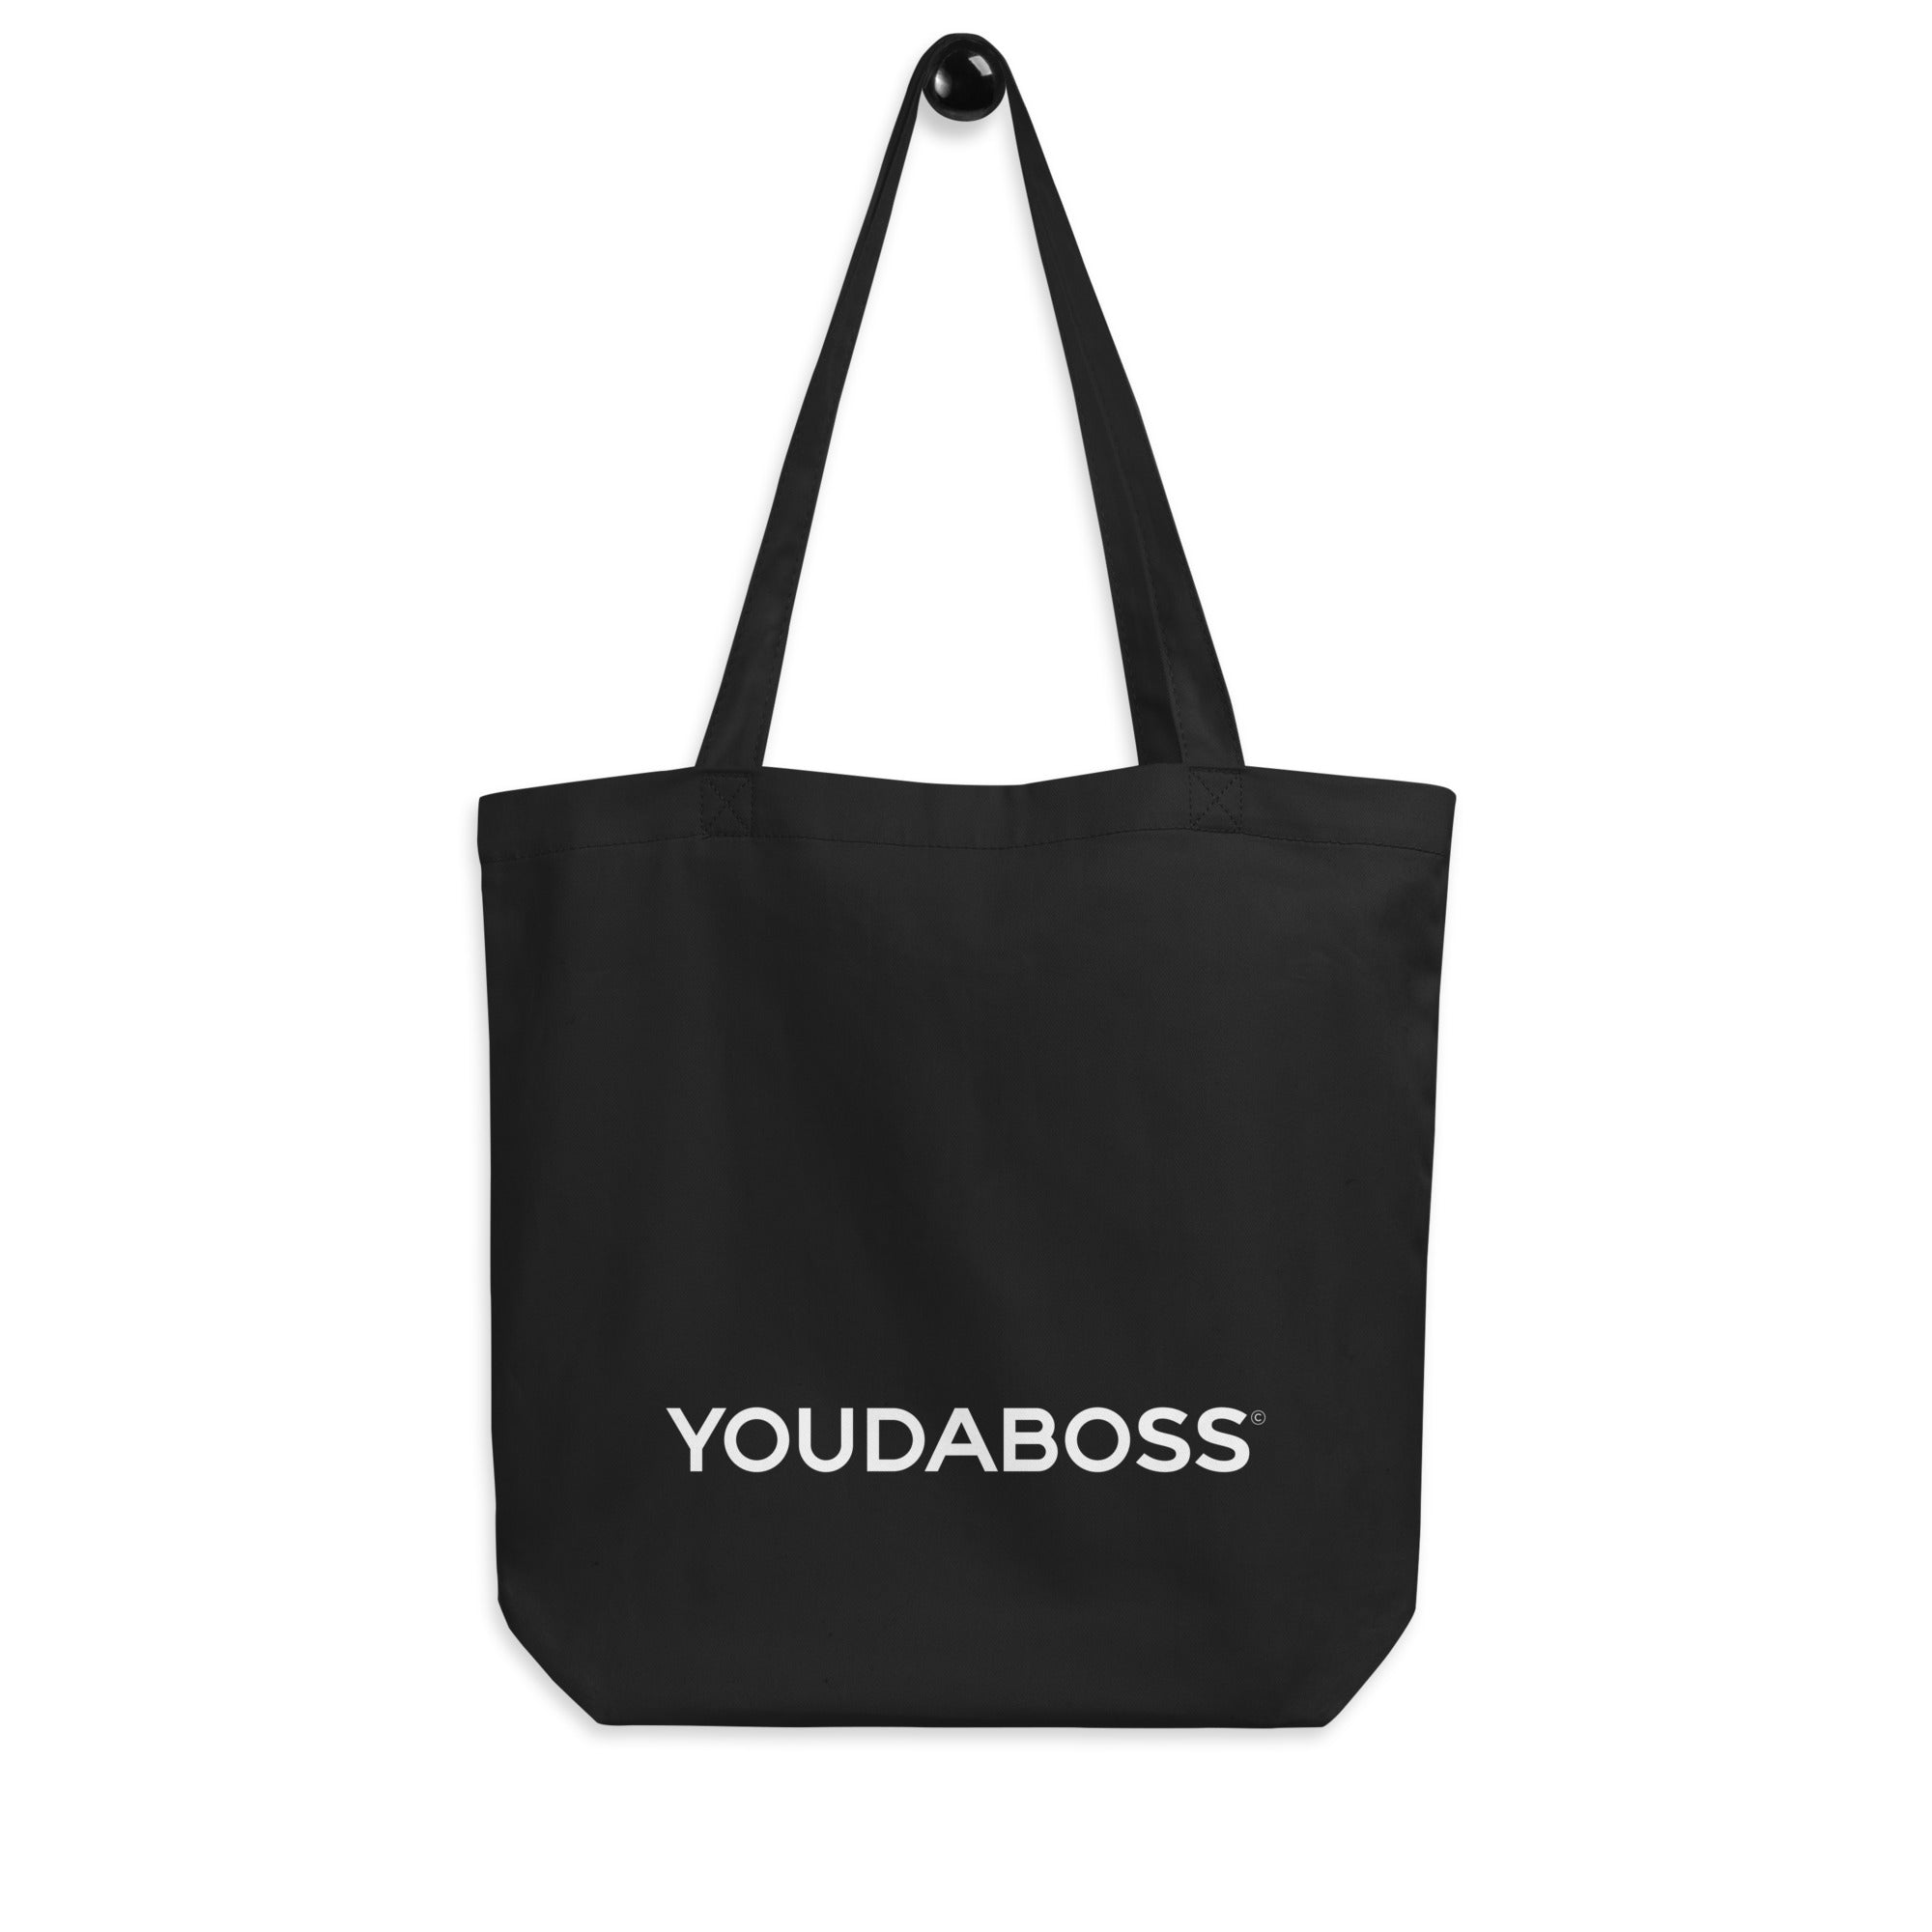 YOUDABOSS - Eco Tote Bag Black